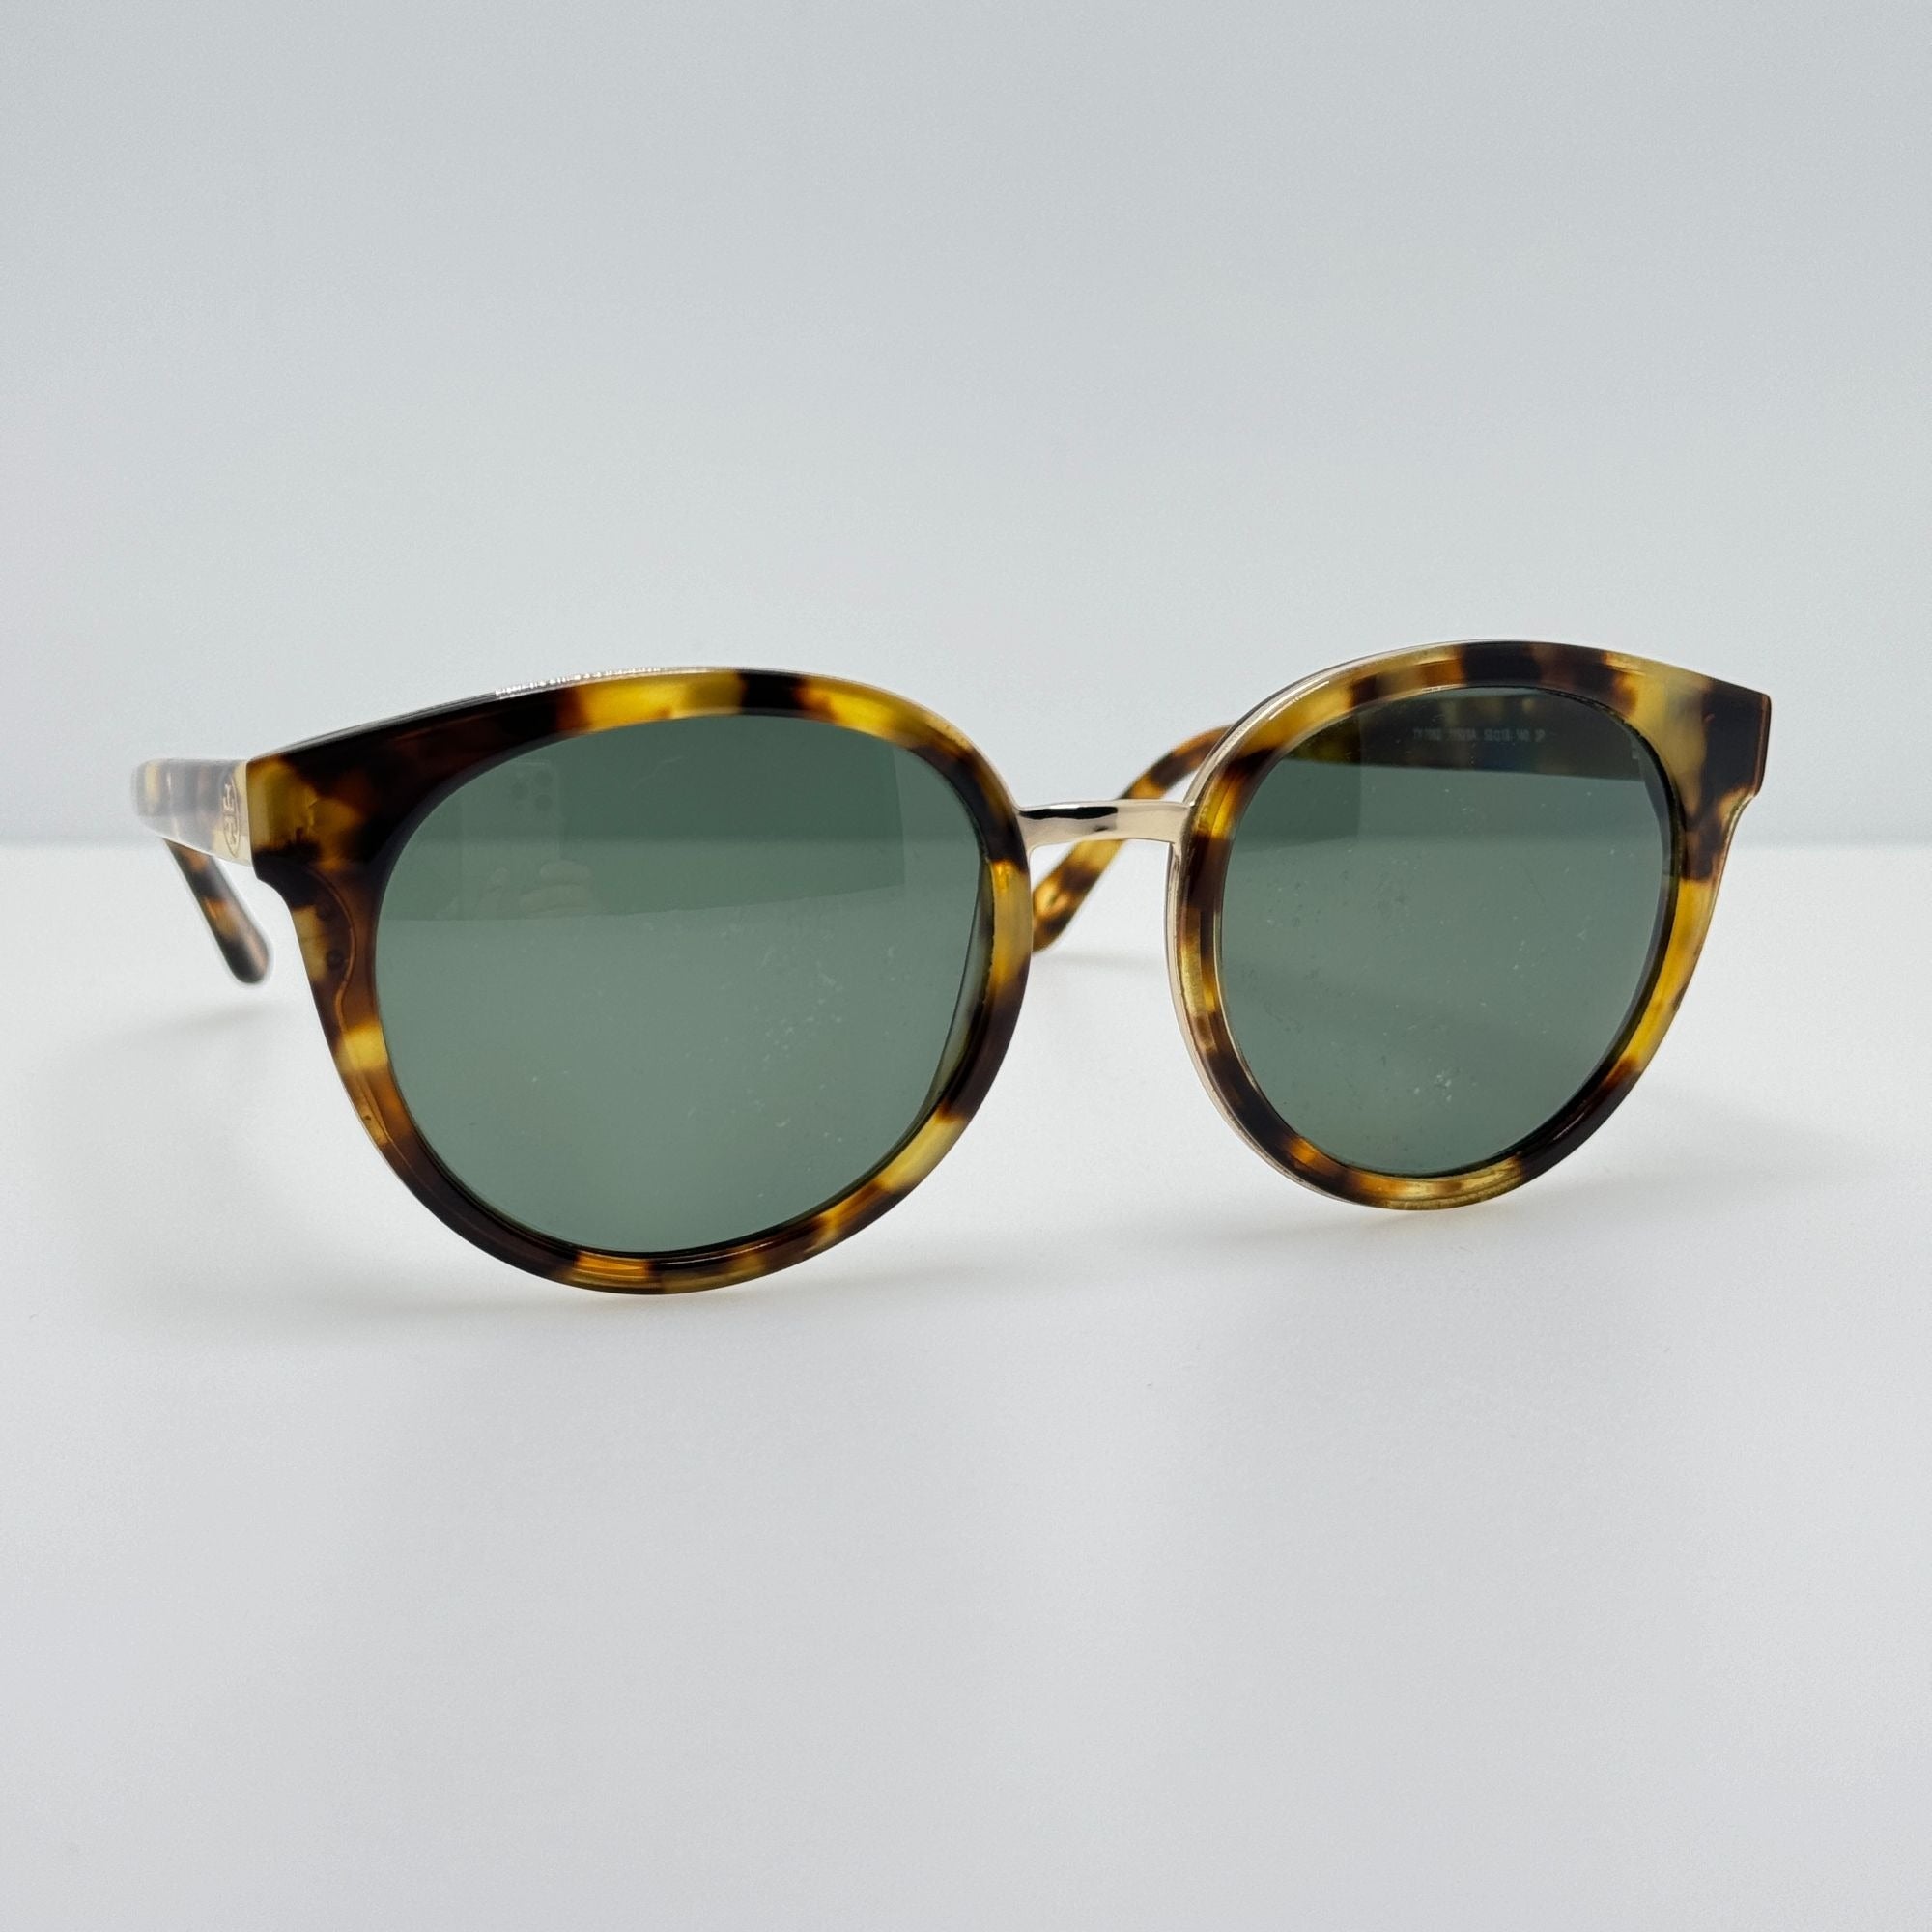 Tory-Burch-Sunglasses-TY-7062-1150/9A-Polarized-53-18-140-Sunglasses